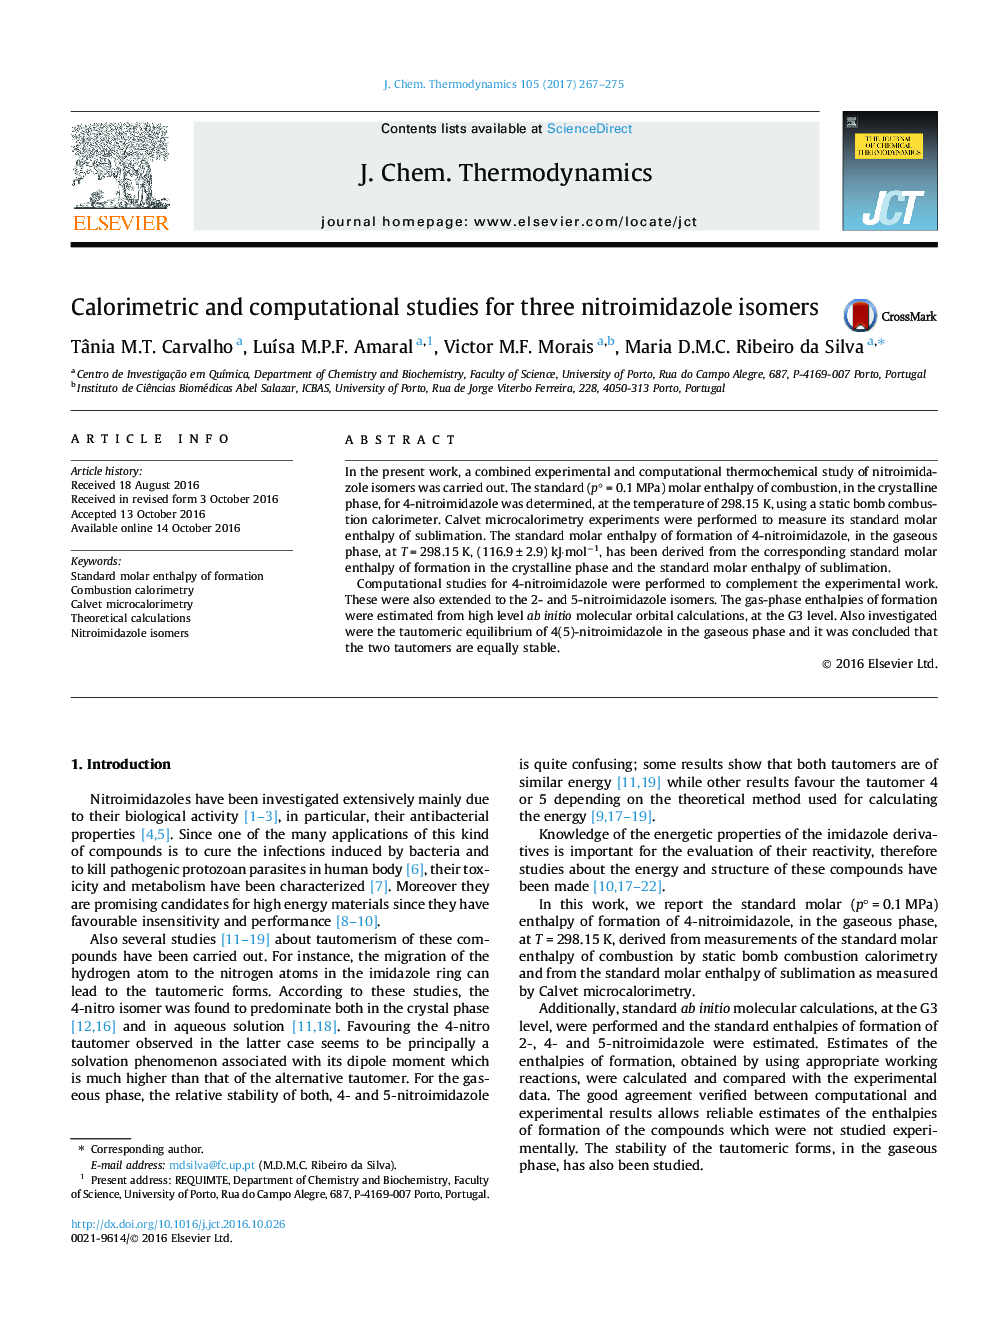 Calorimetric and computational studies for three nitroimidazole isomers